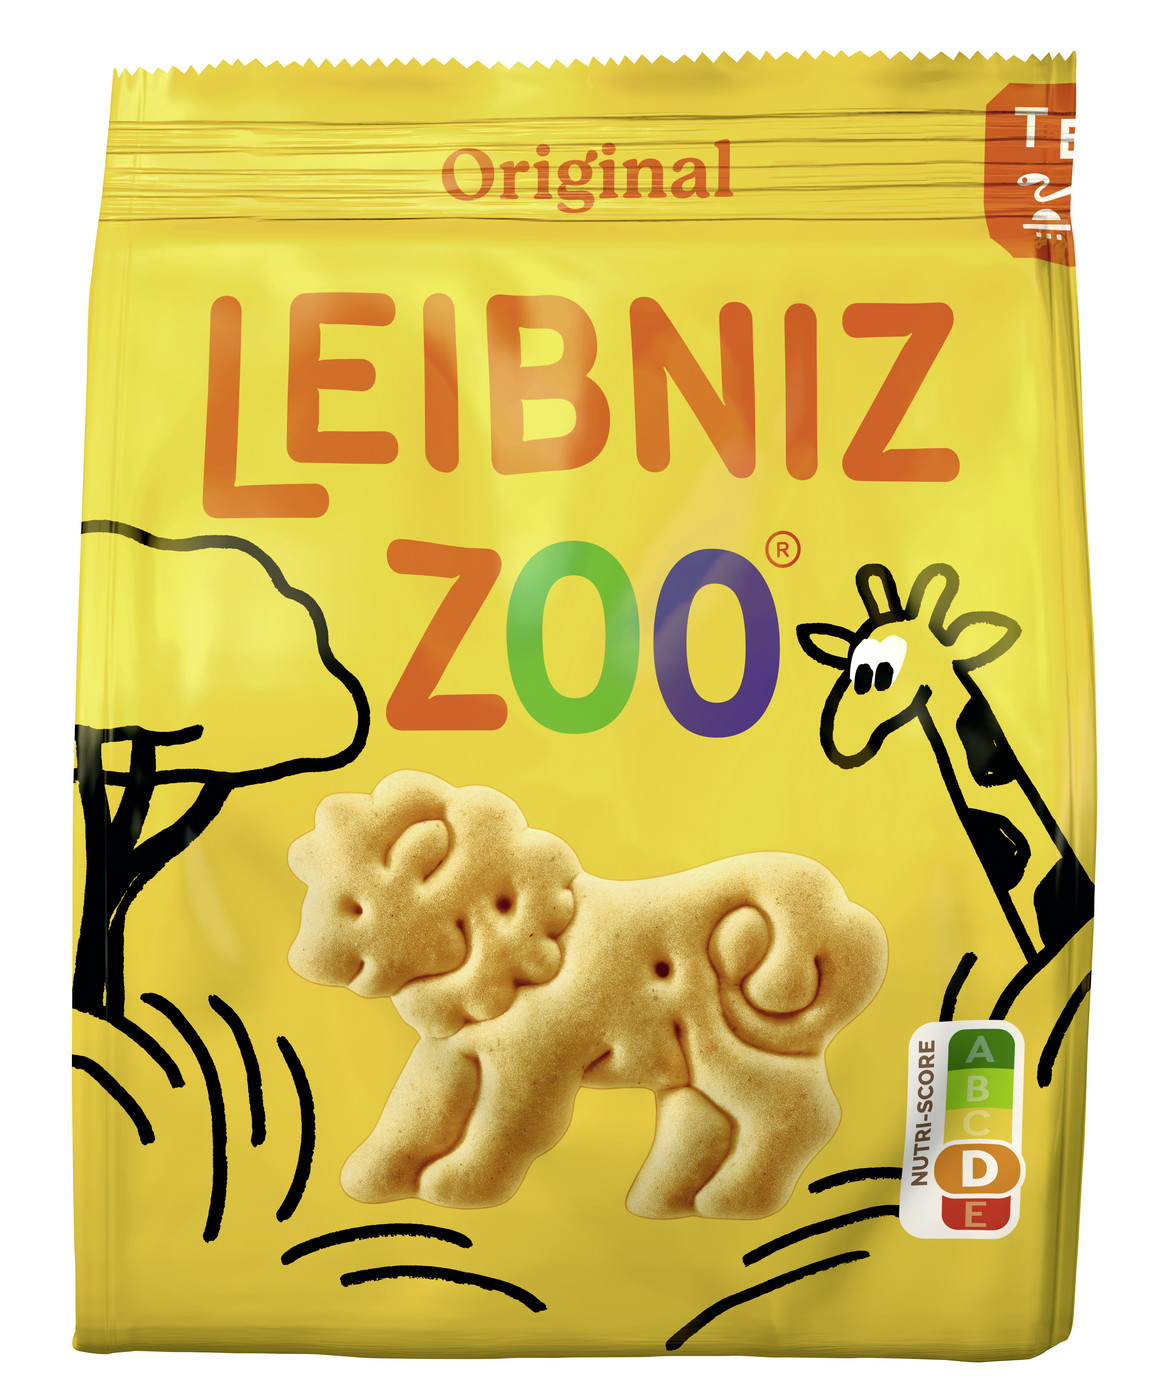 Leibniz Zoo Original 125G